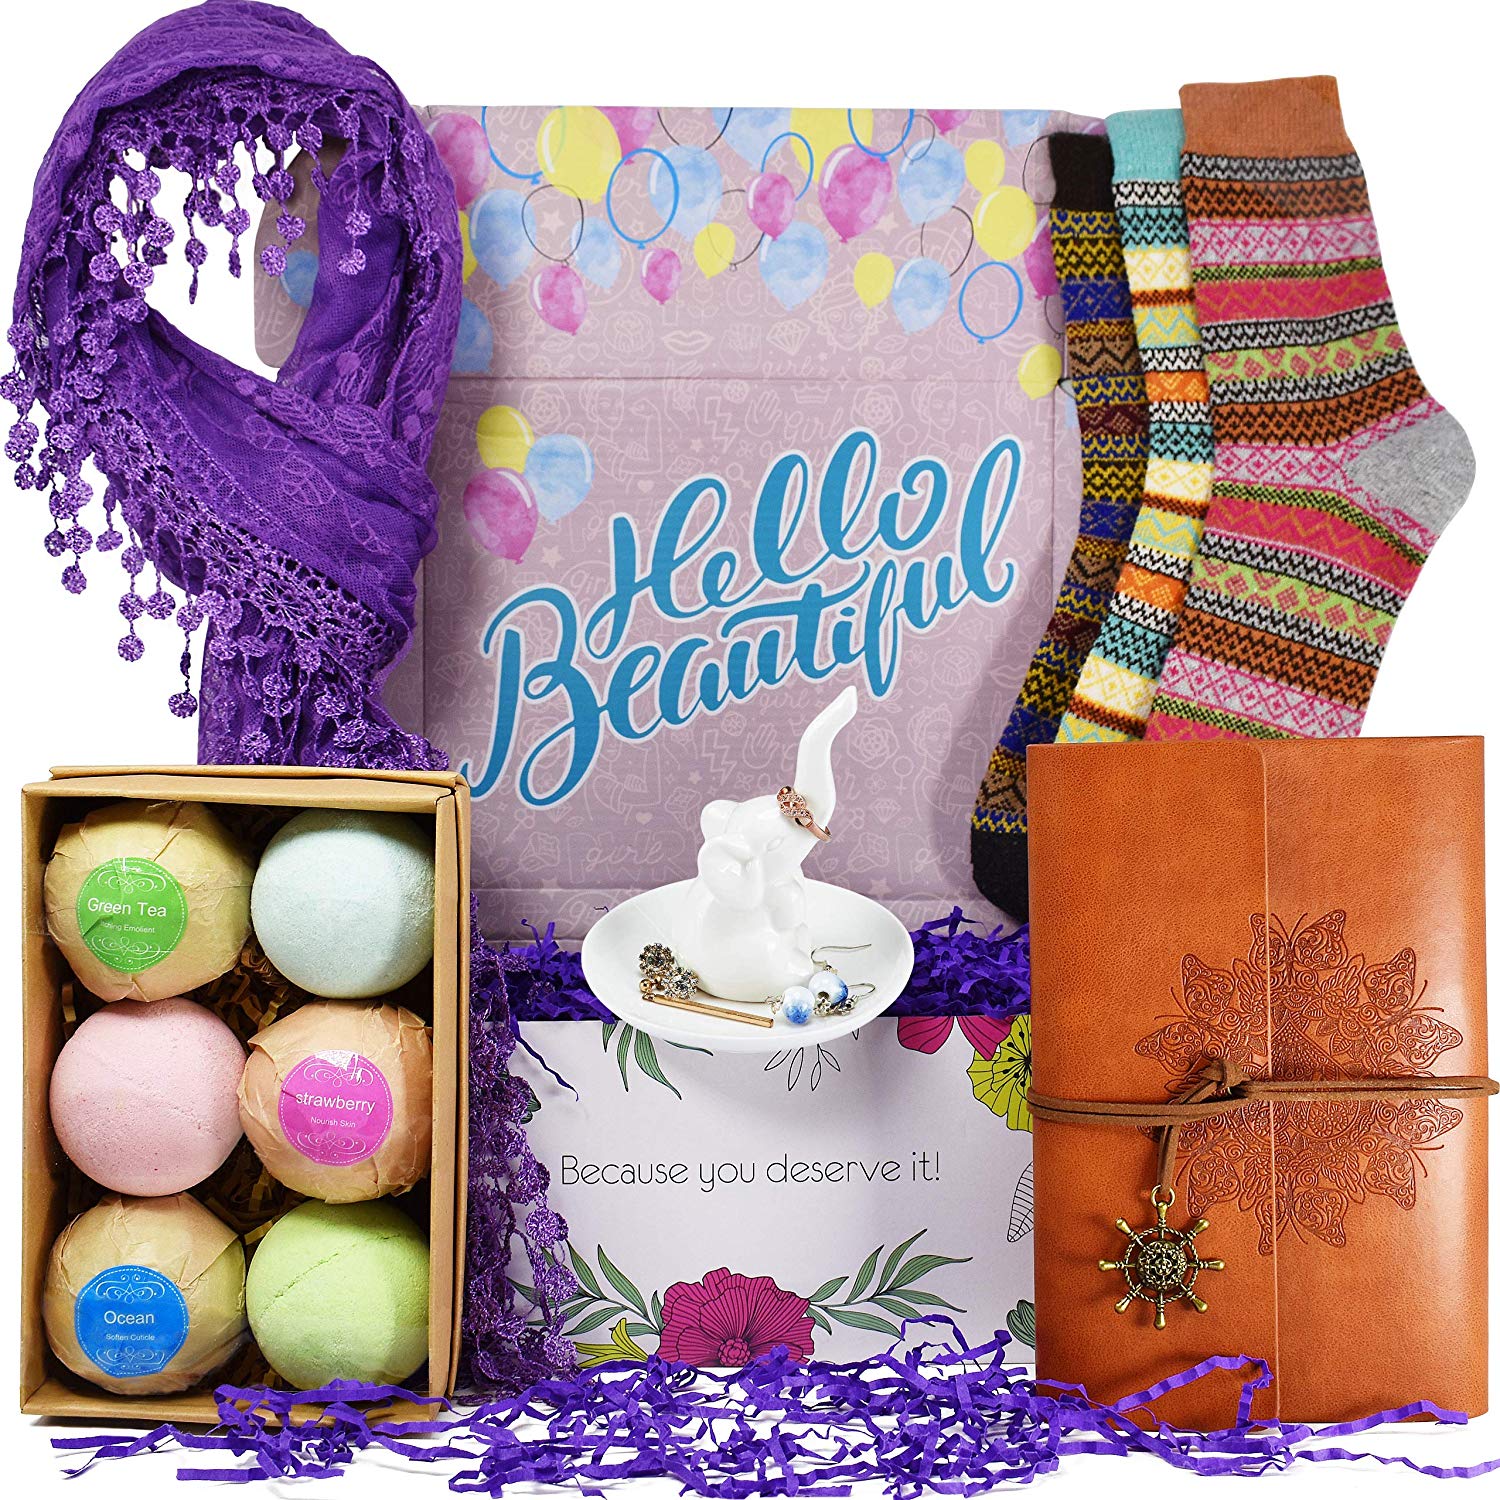 Easy Gift Basket Ideas For Women - Lela Shawna